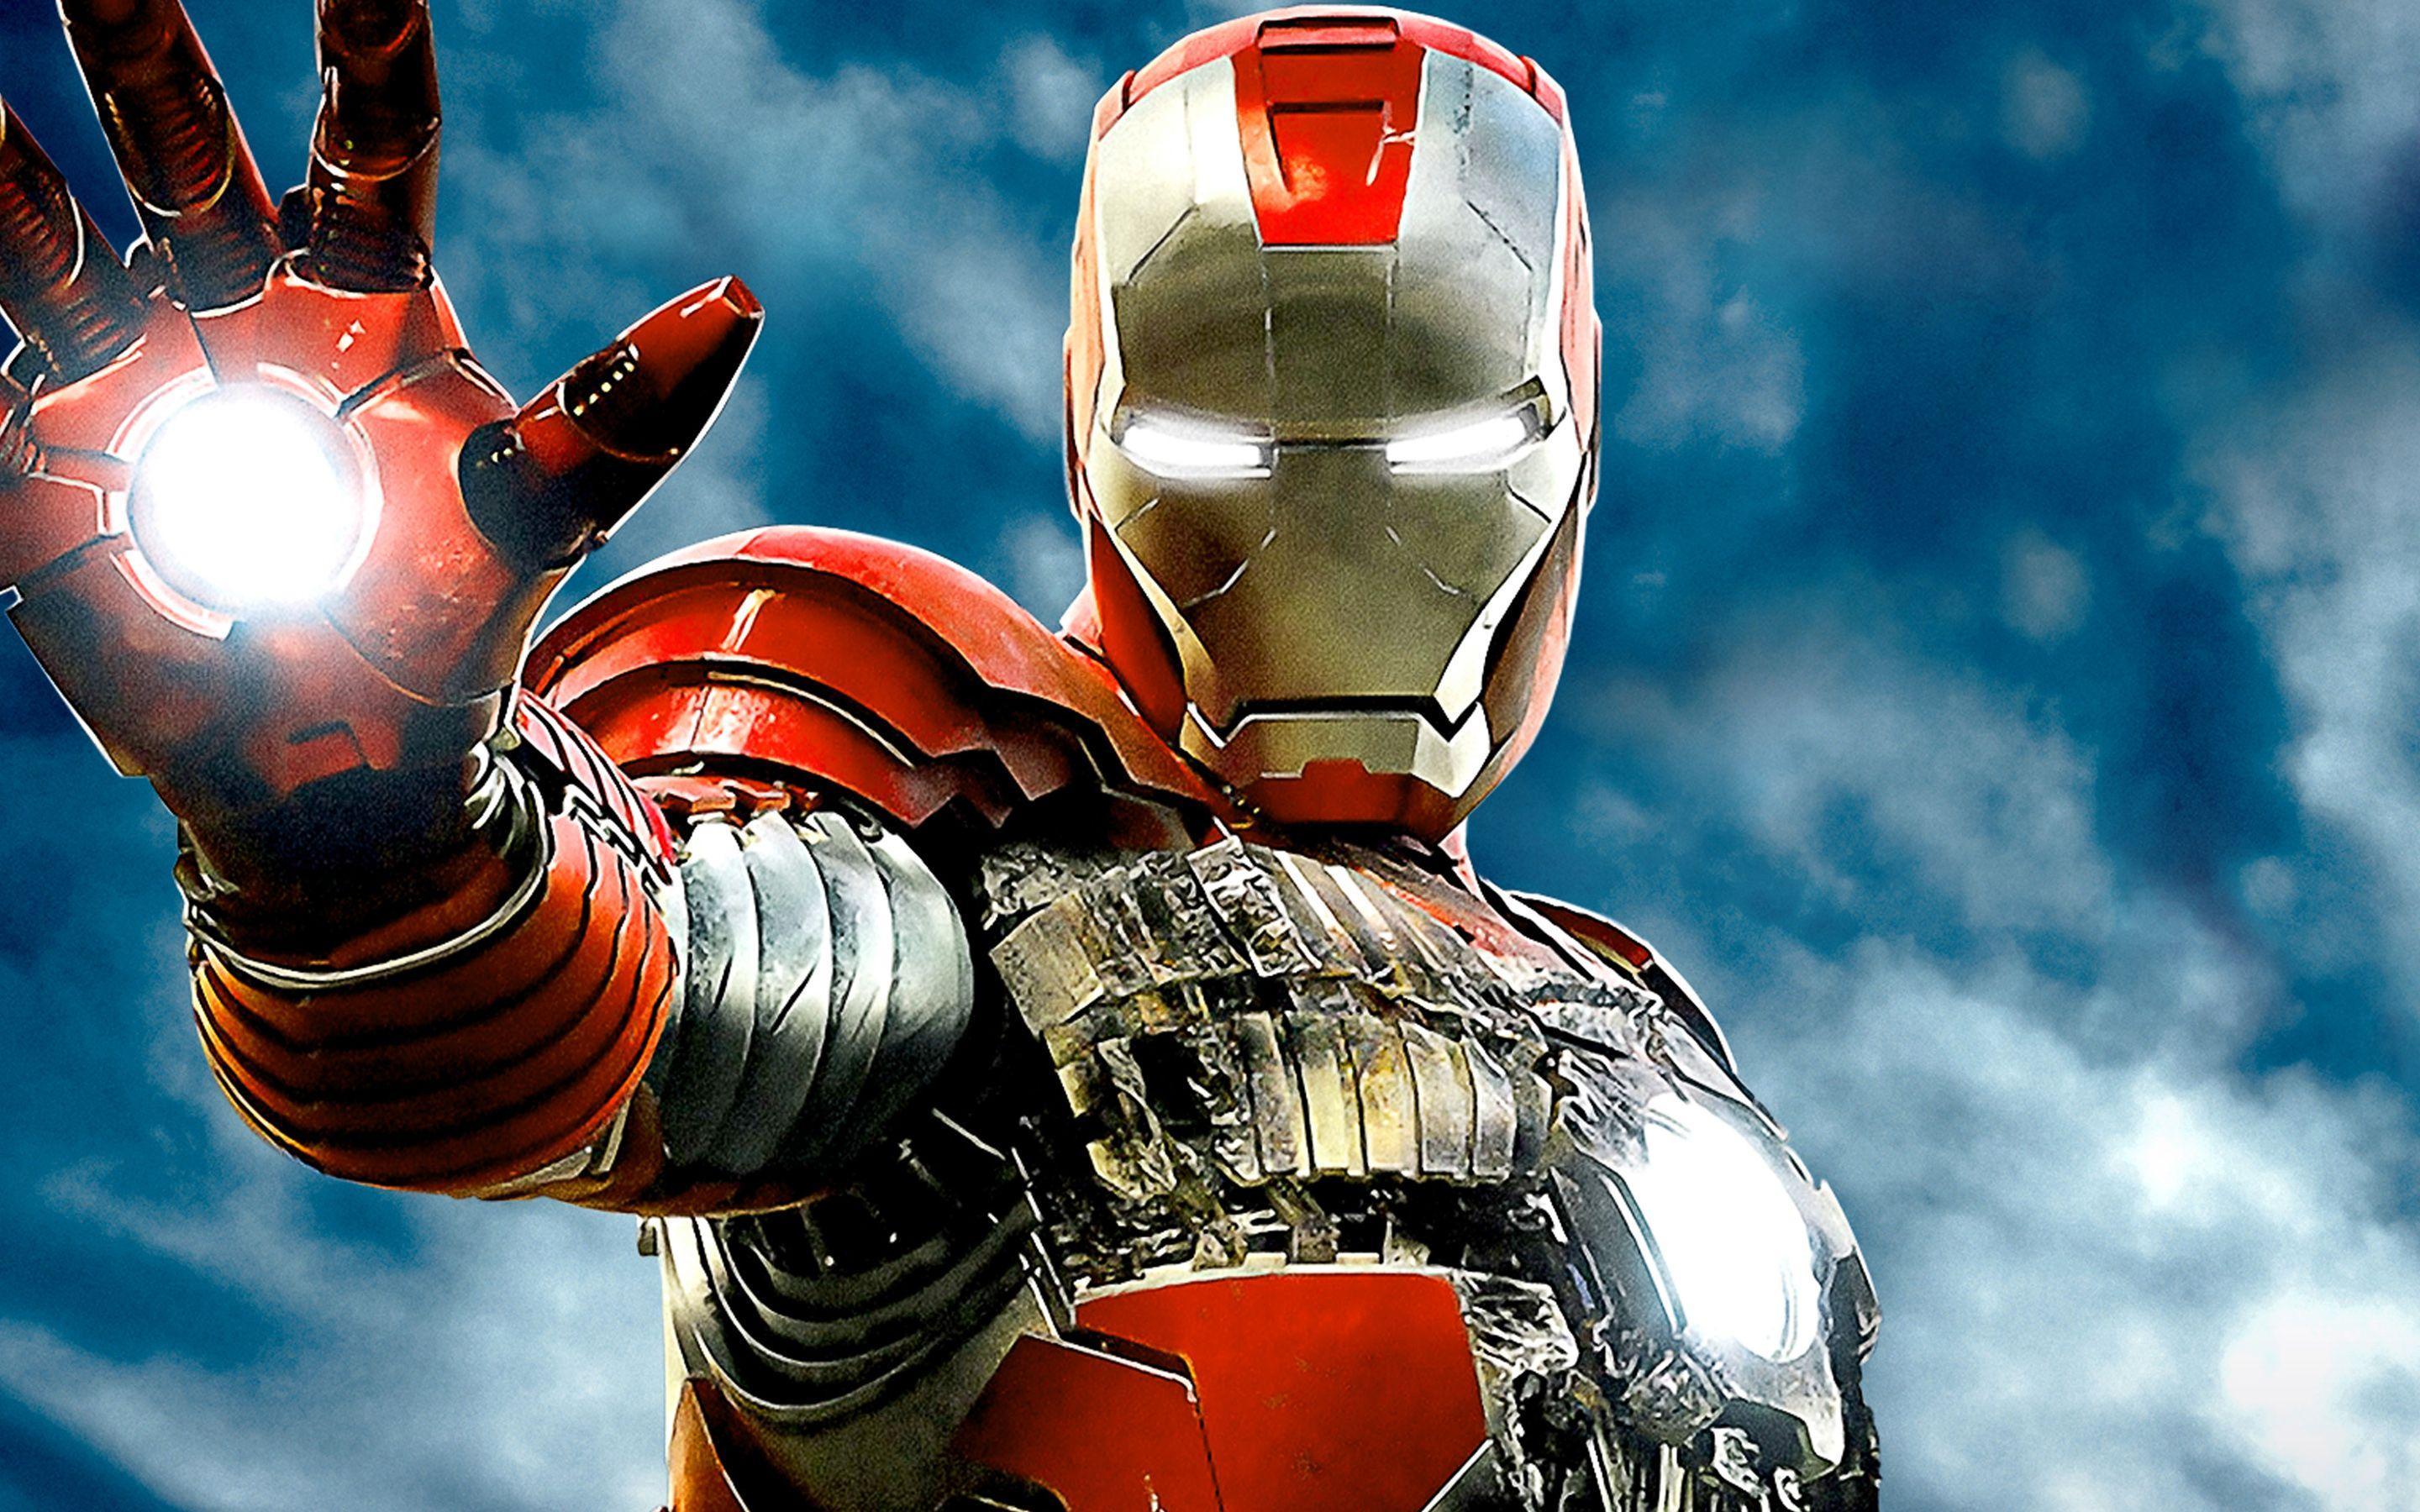 Iron Man 2 IMAX Poster Wallpapers